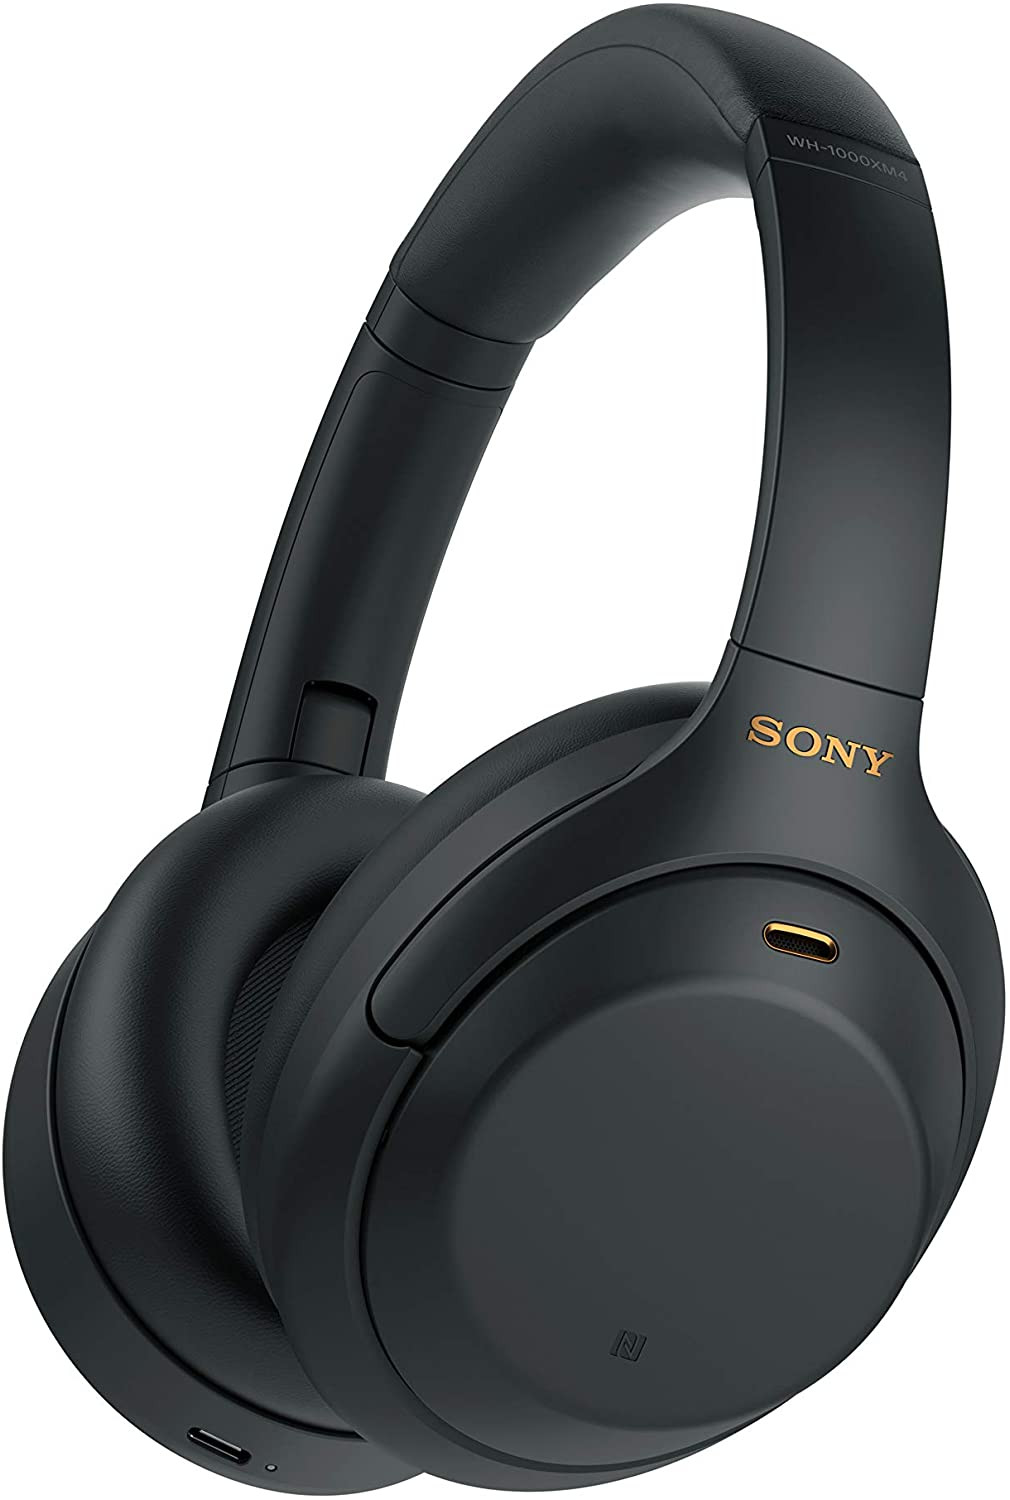 Sony WH-1000X M4 Wireless Noise-Canceling Headphone Black